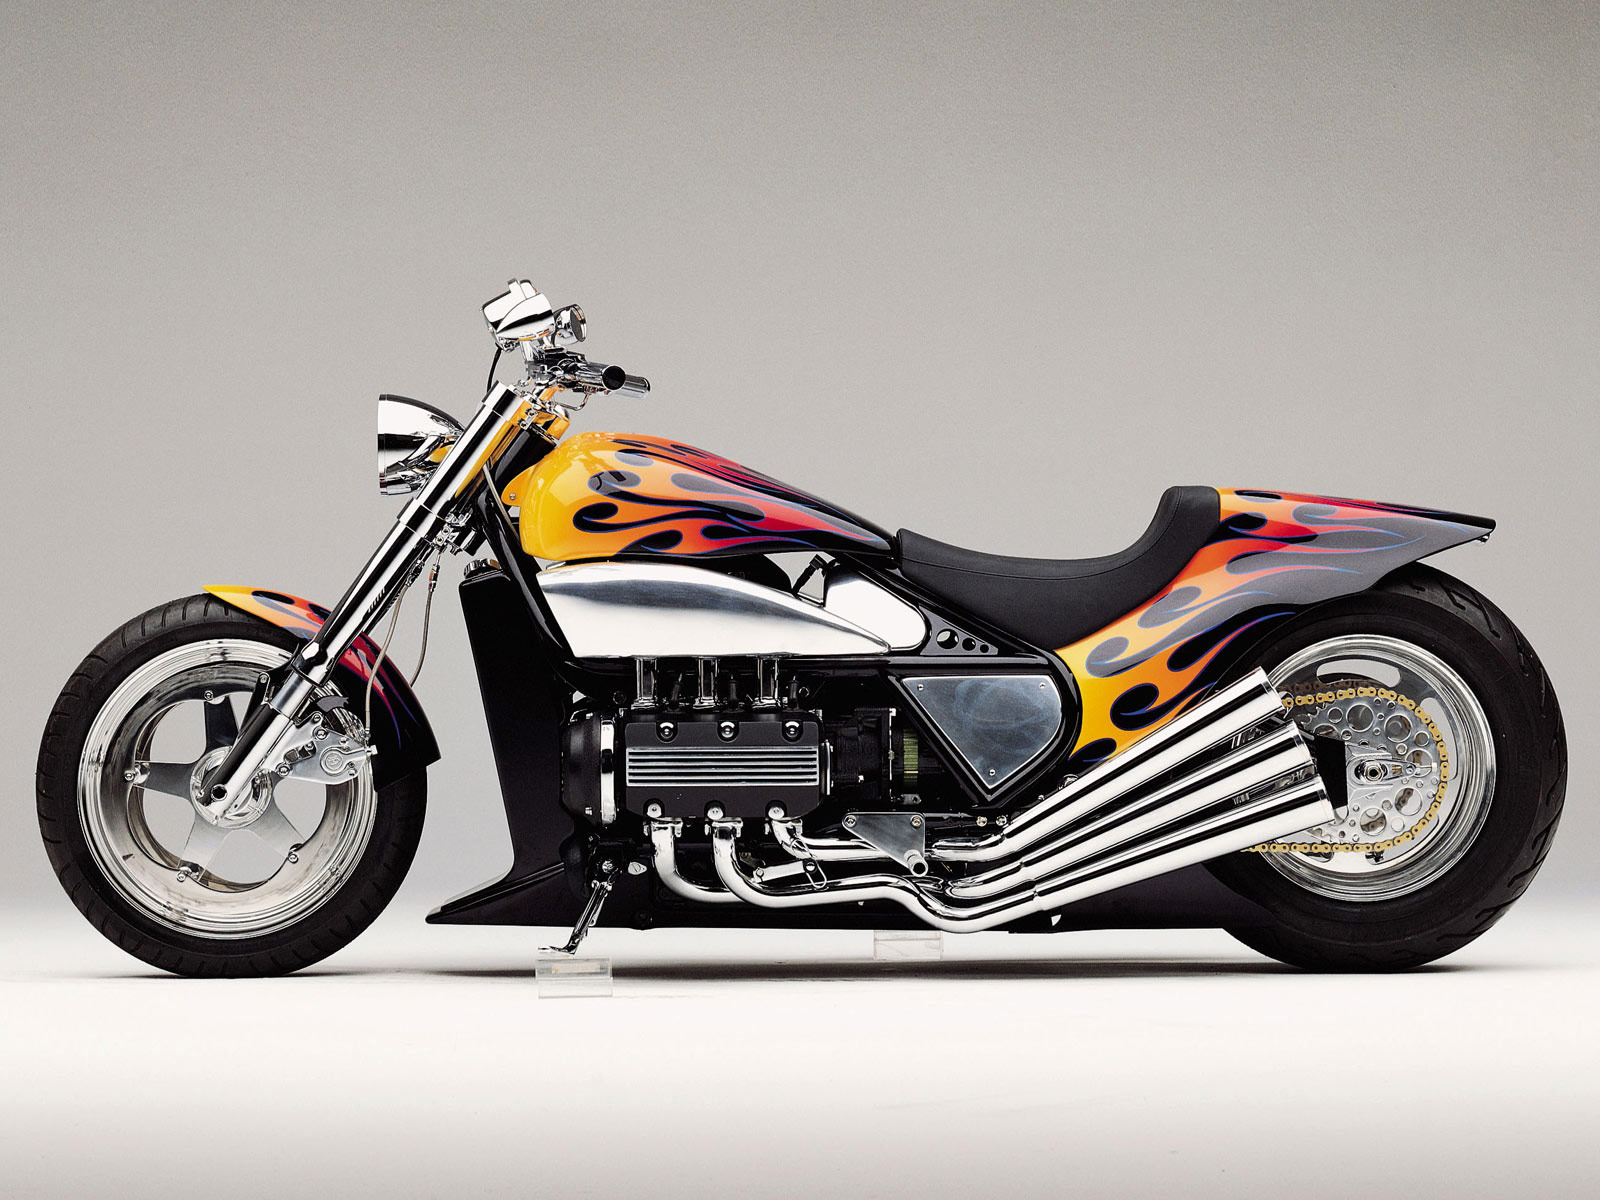 Concept honda motorcycle